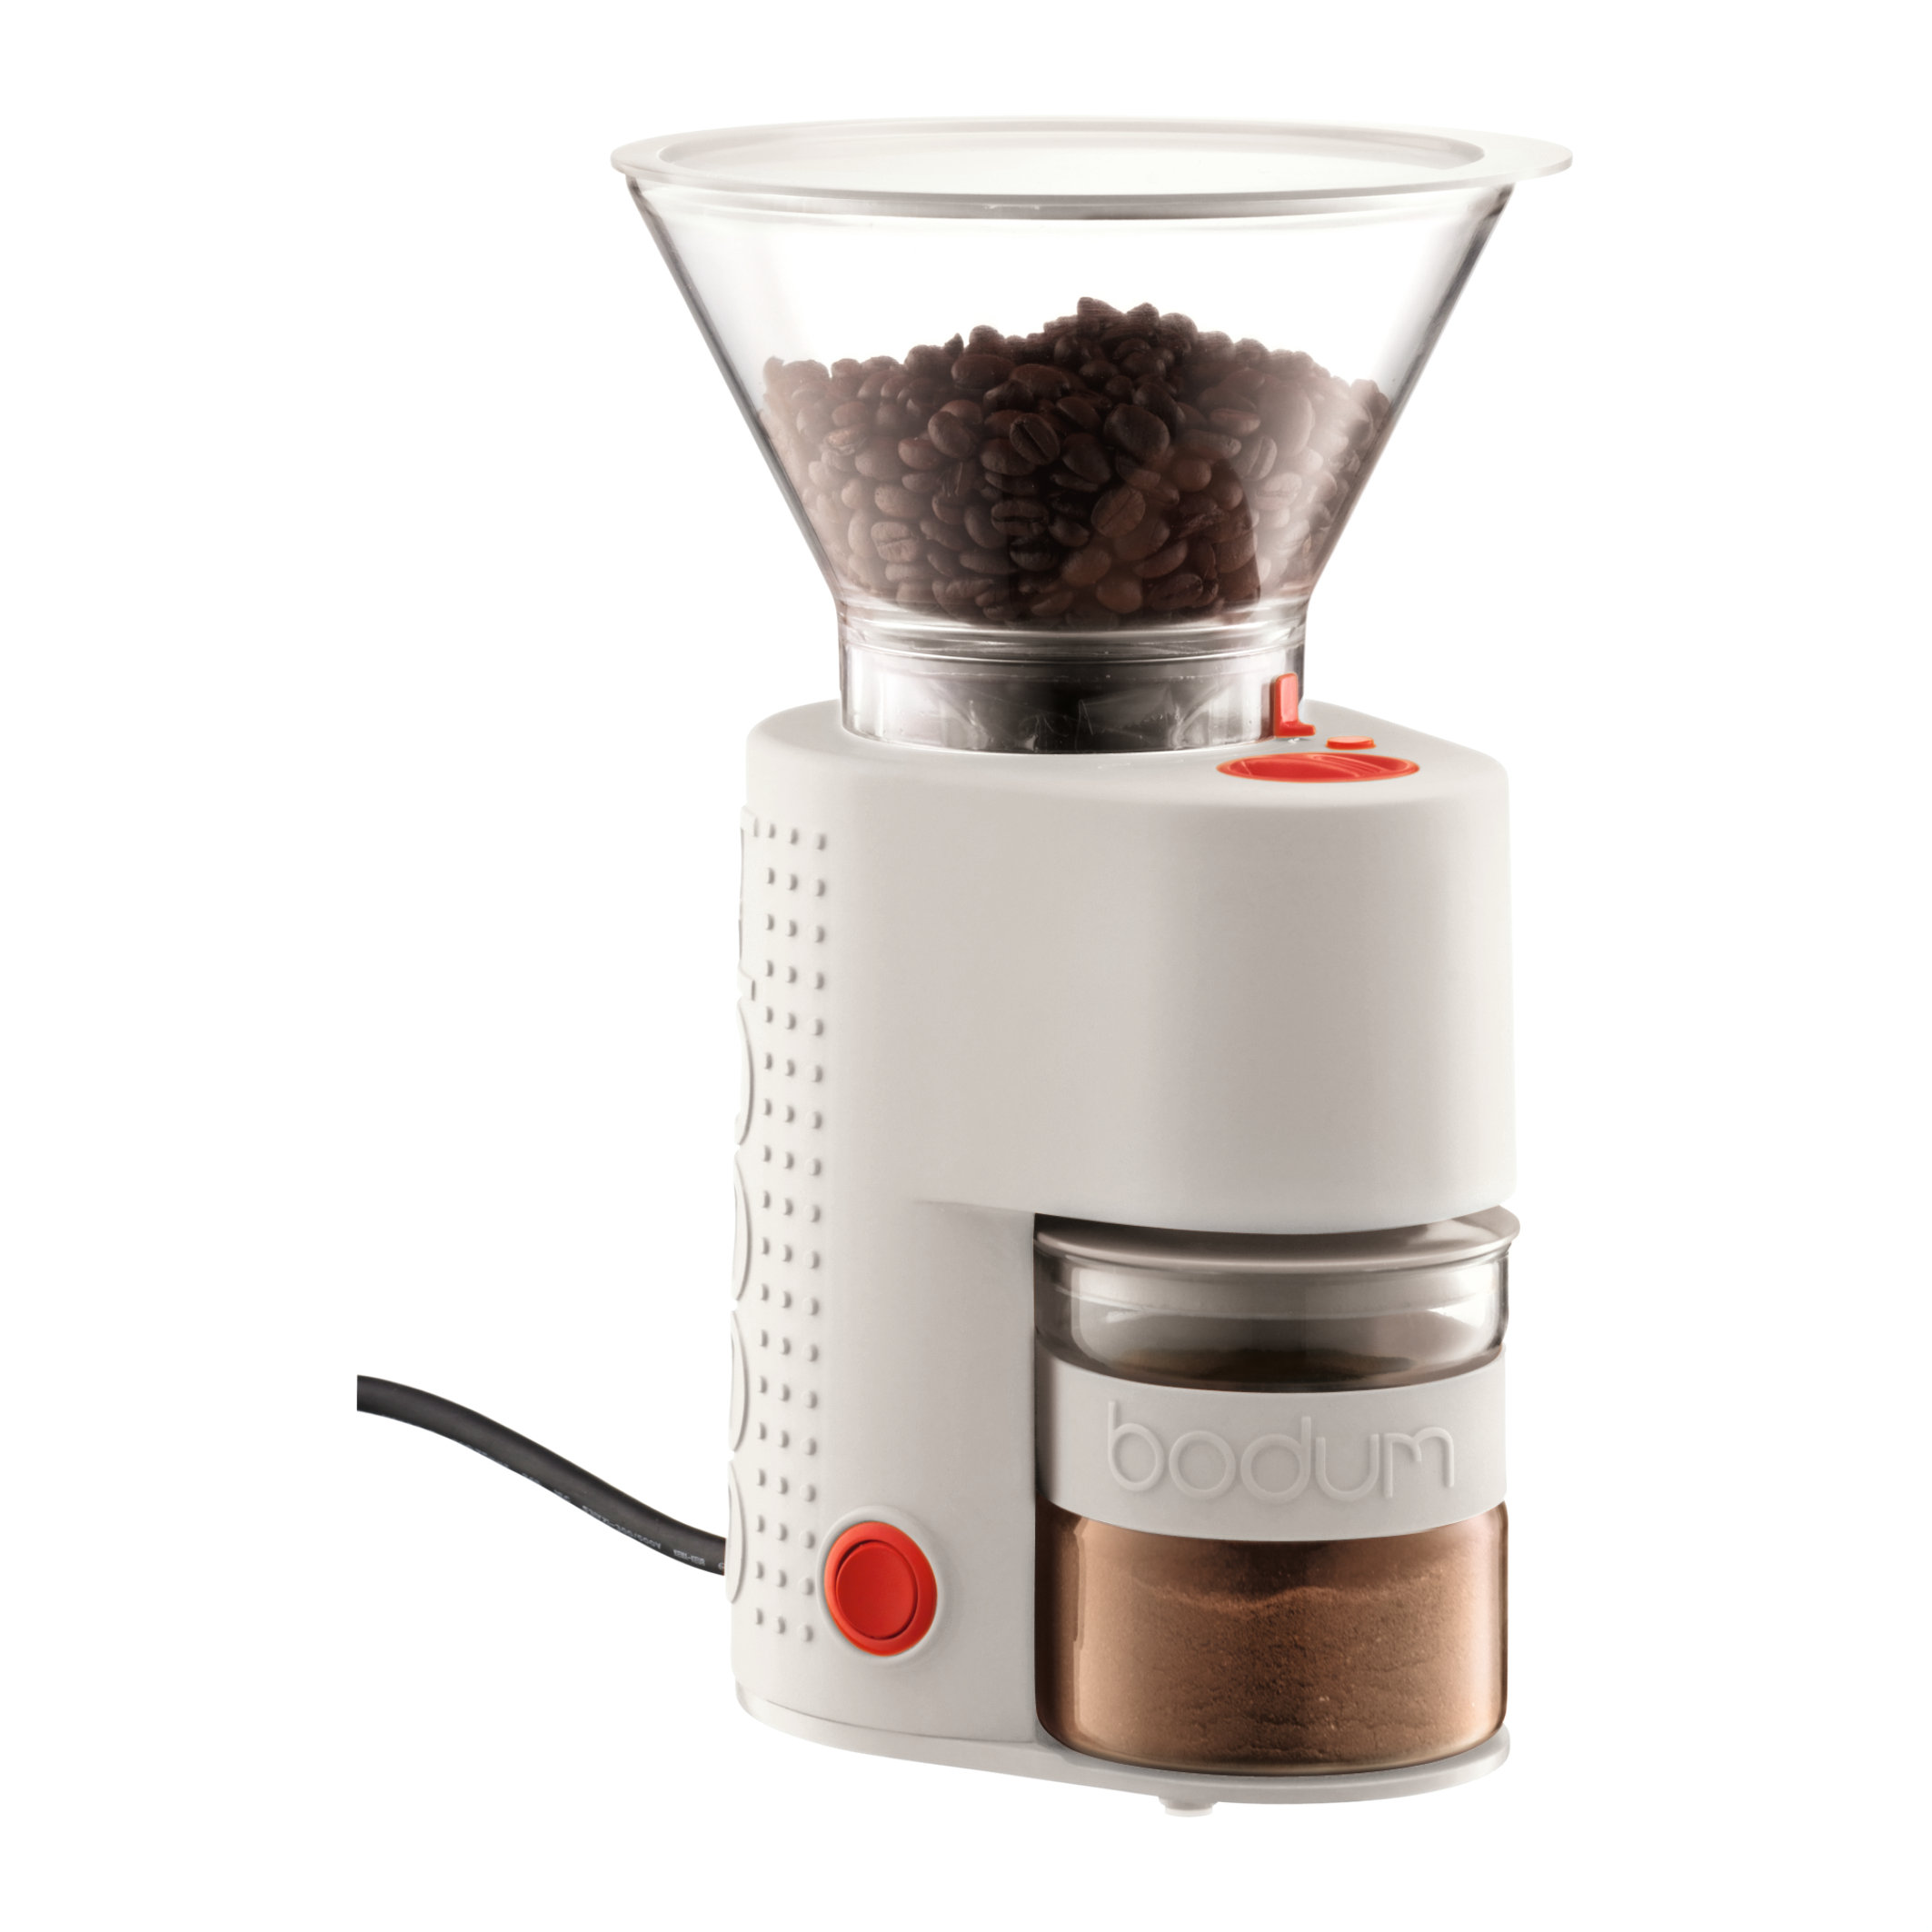 bodum coffee grinder review